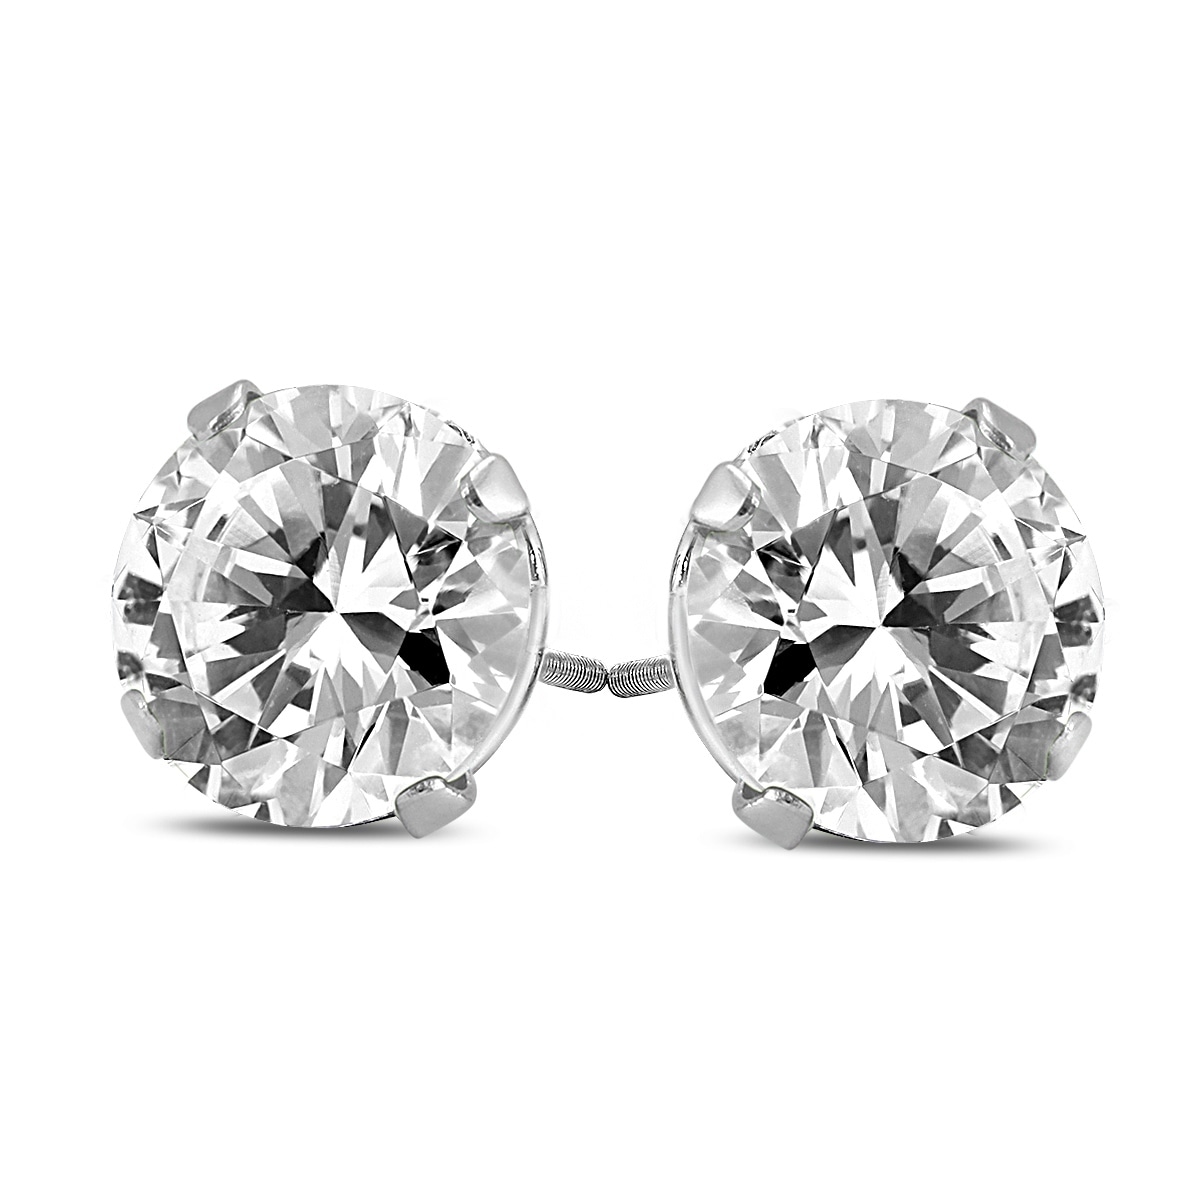 2 Carat TW Diamond Solitaire Earrings 